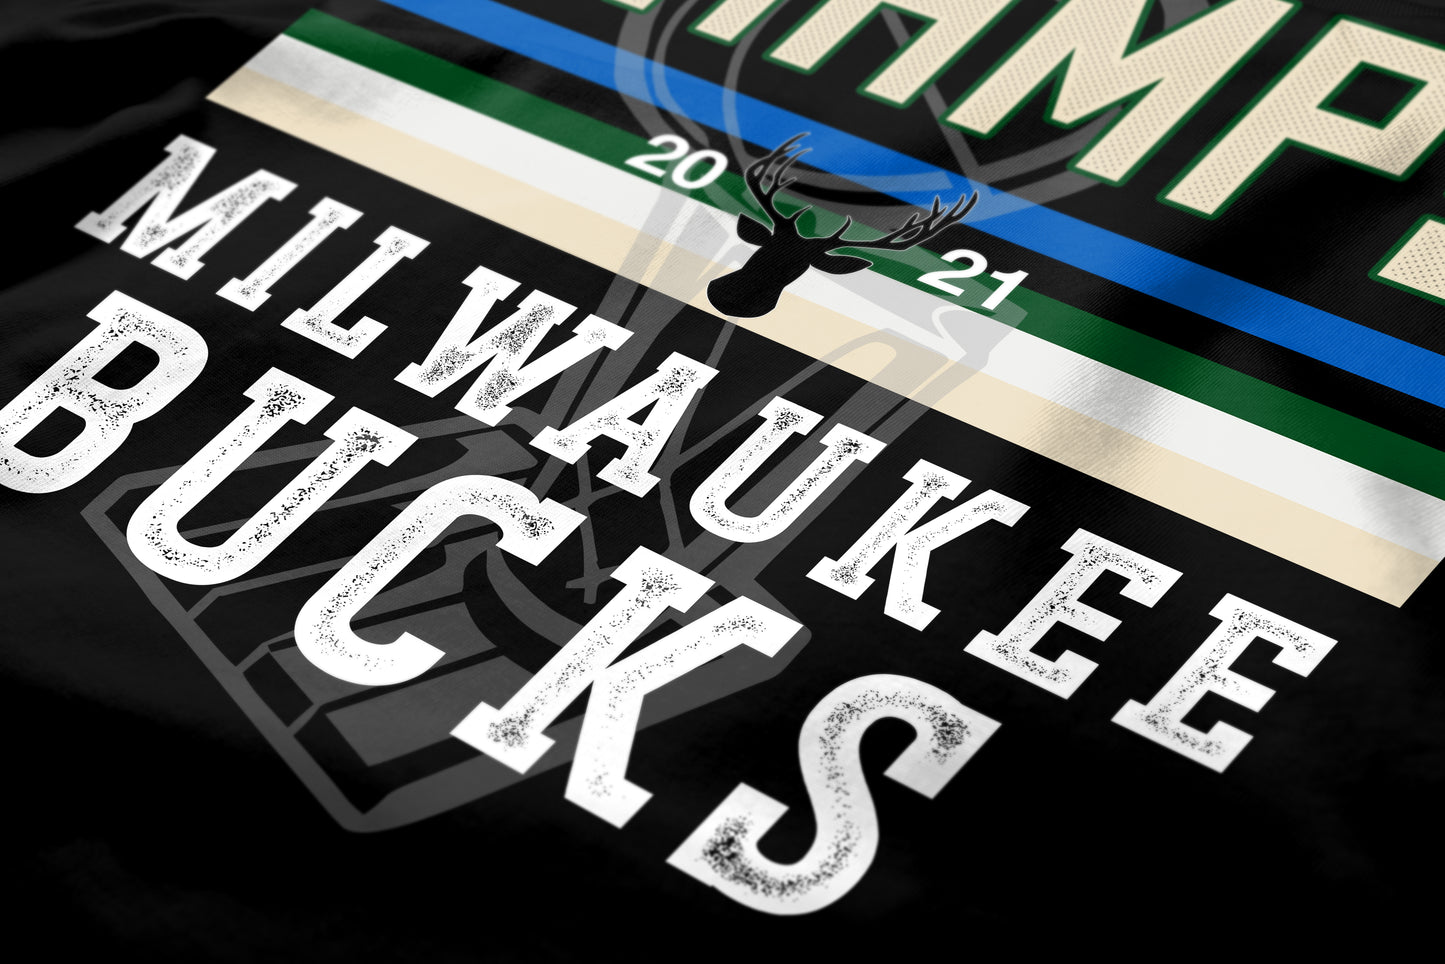 Bucks T-Shirt, Champs 2021, Milwaukee Basketball